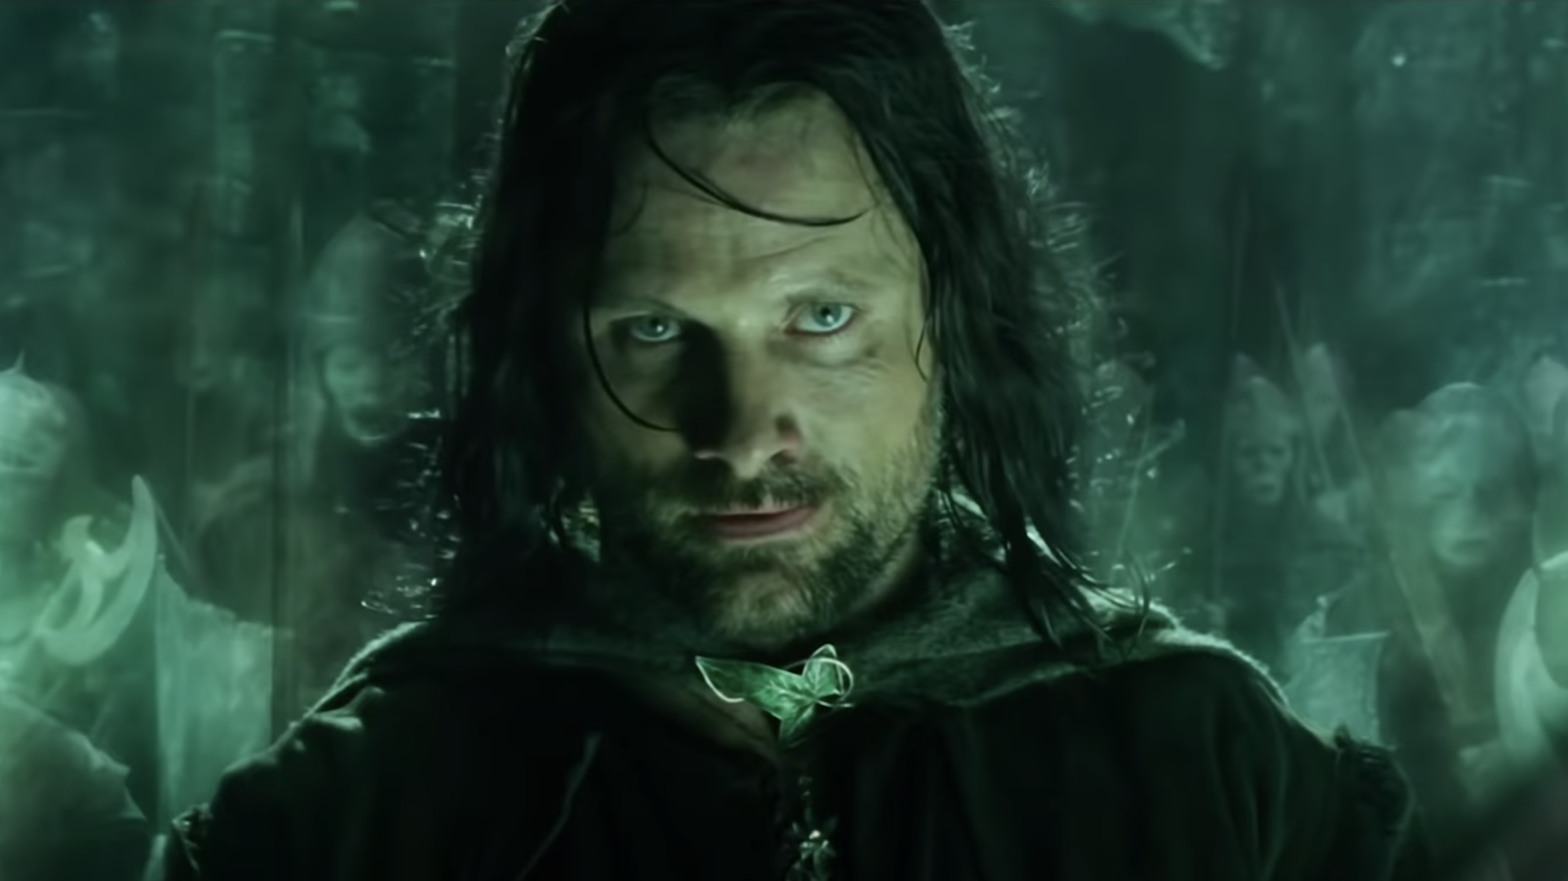 The King of Gondor is unimpressed. (Image: New Line Cinema)